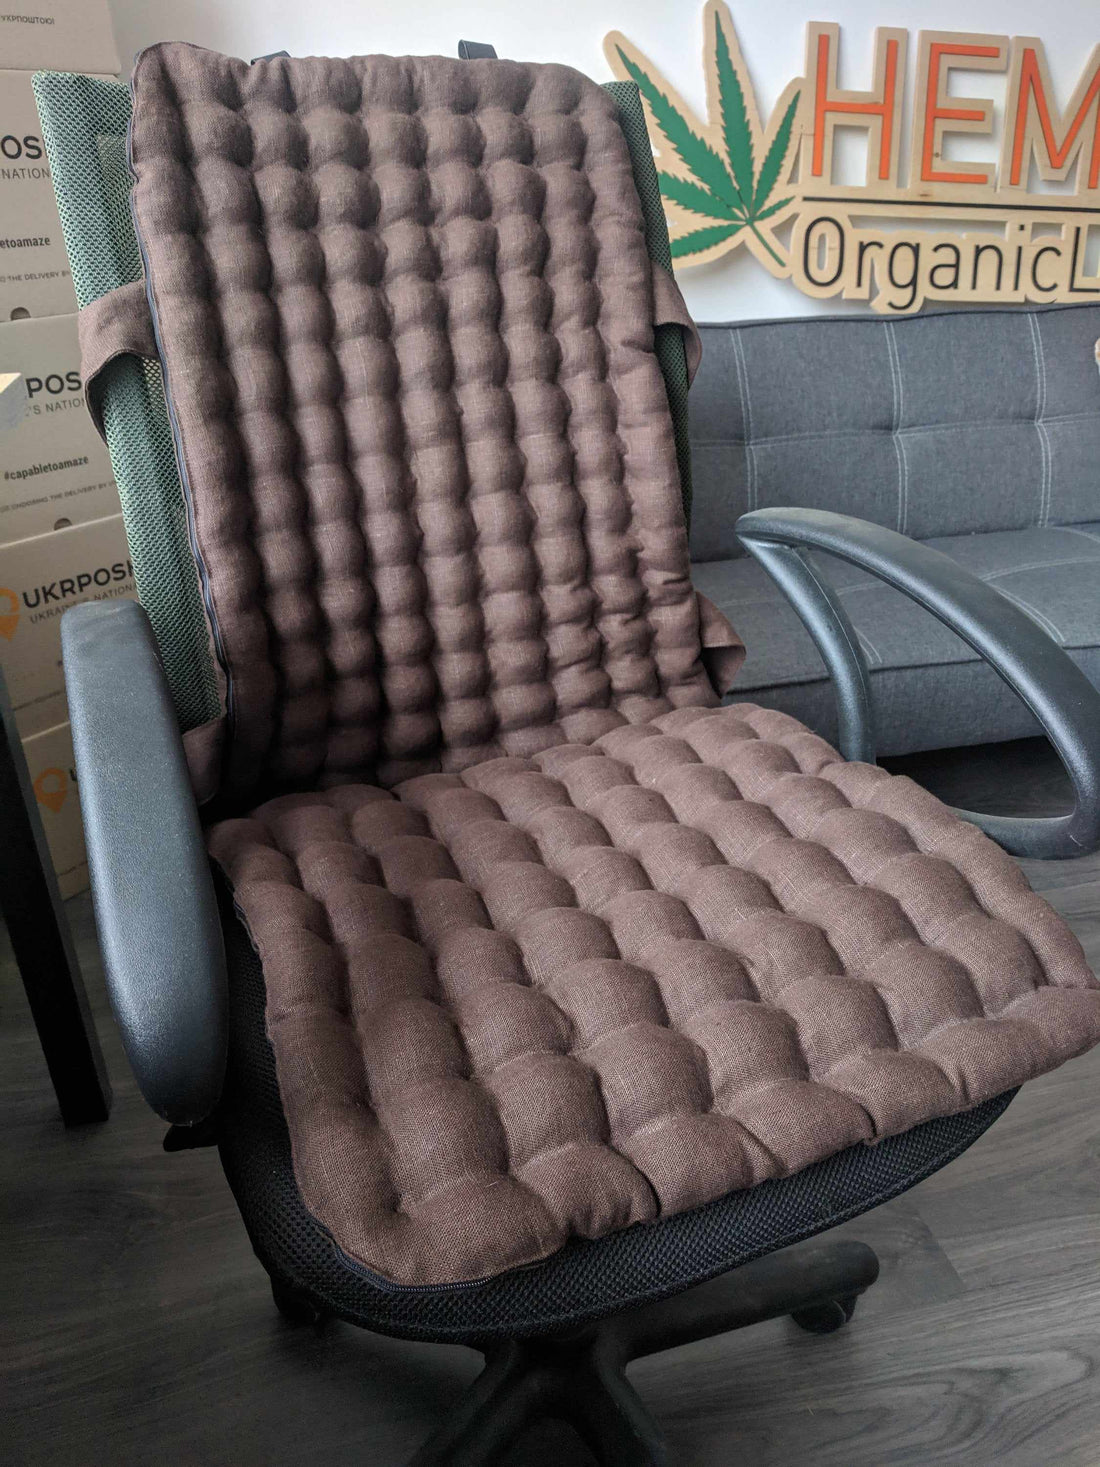 Organic Car Seat Cover Filling Buckwheat Hulls/massage Orthopedic/car Seat  Cover/buckwheat/floor Cushion/ Organic Car/eco-frendly/floor Seat 